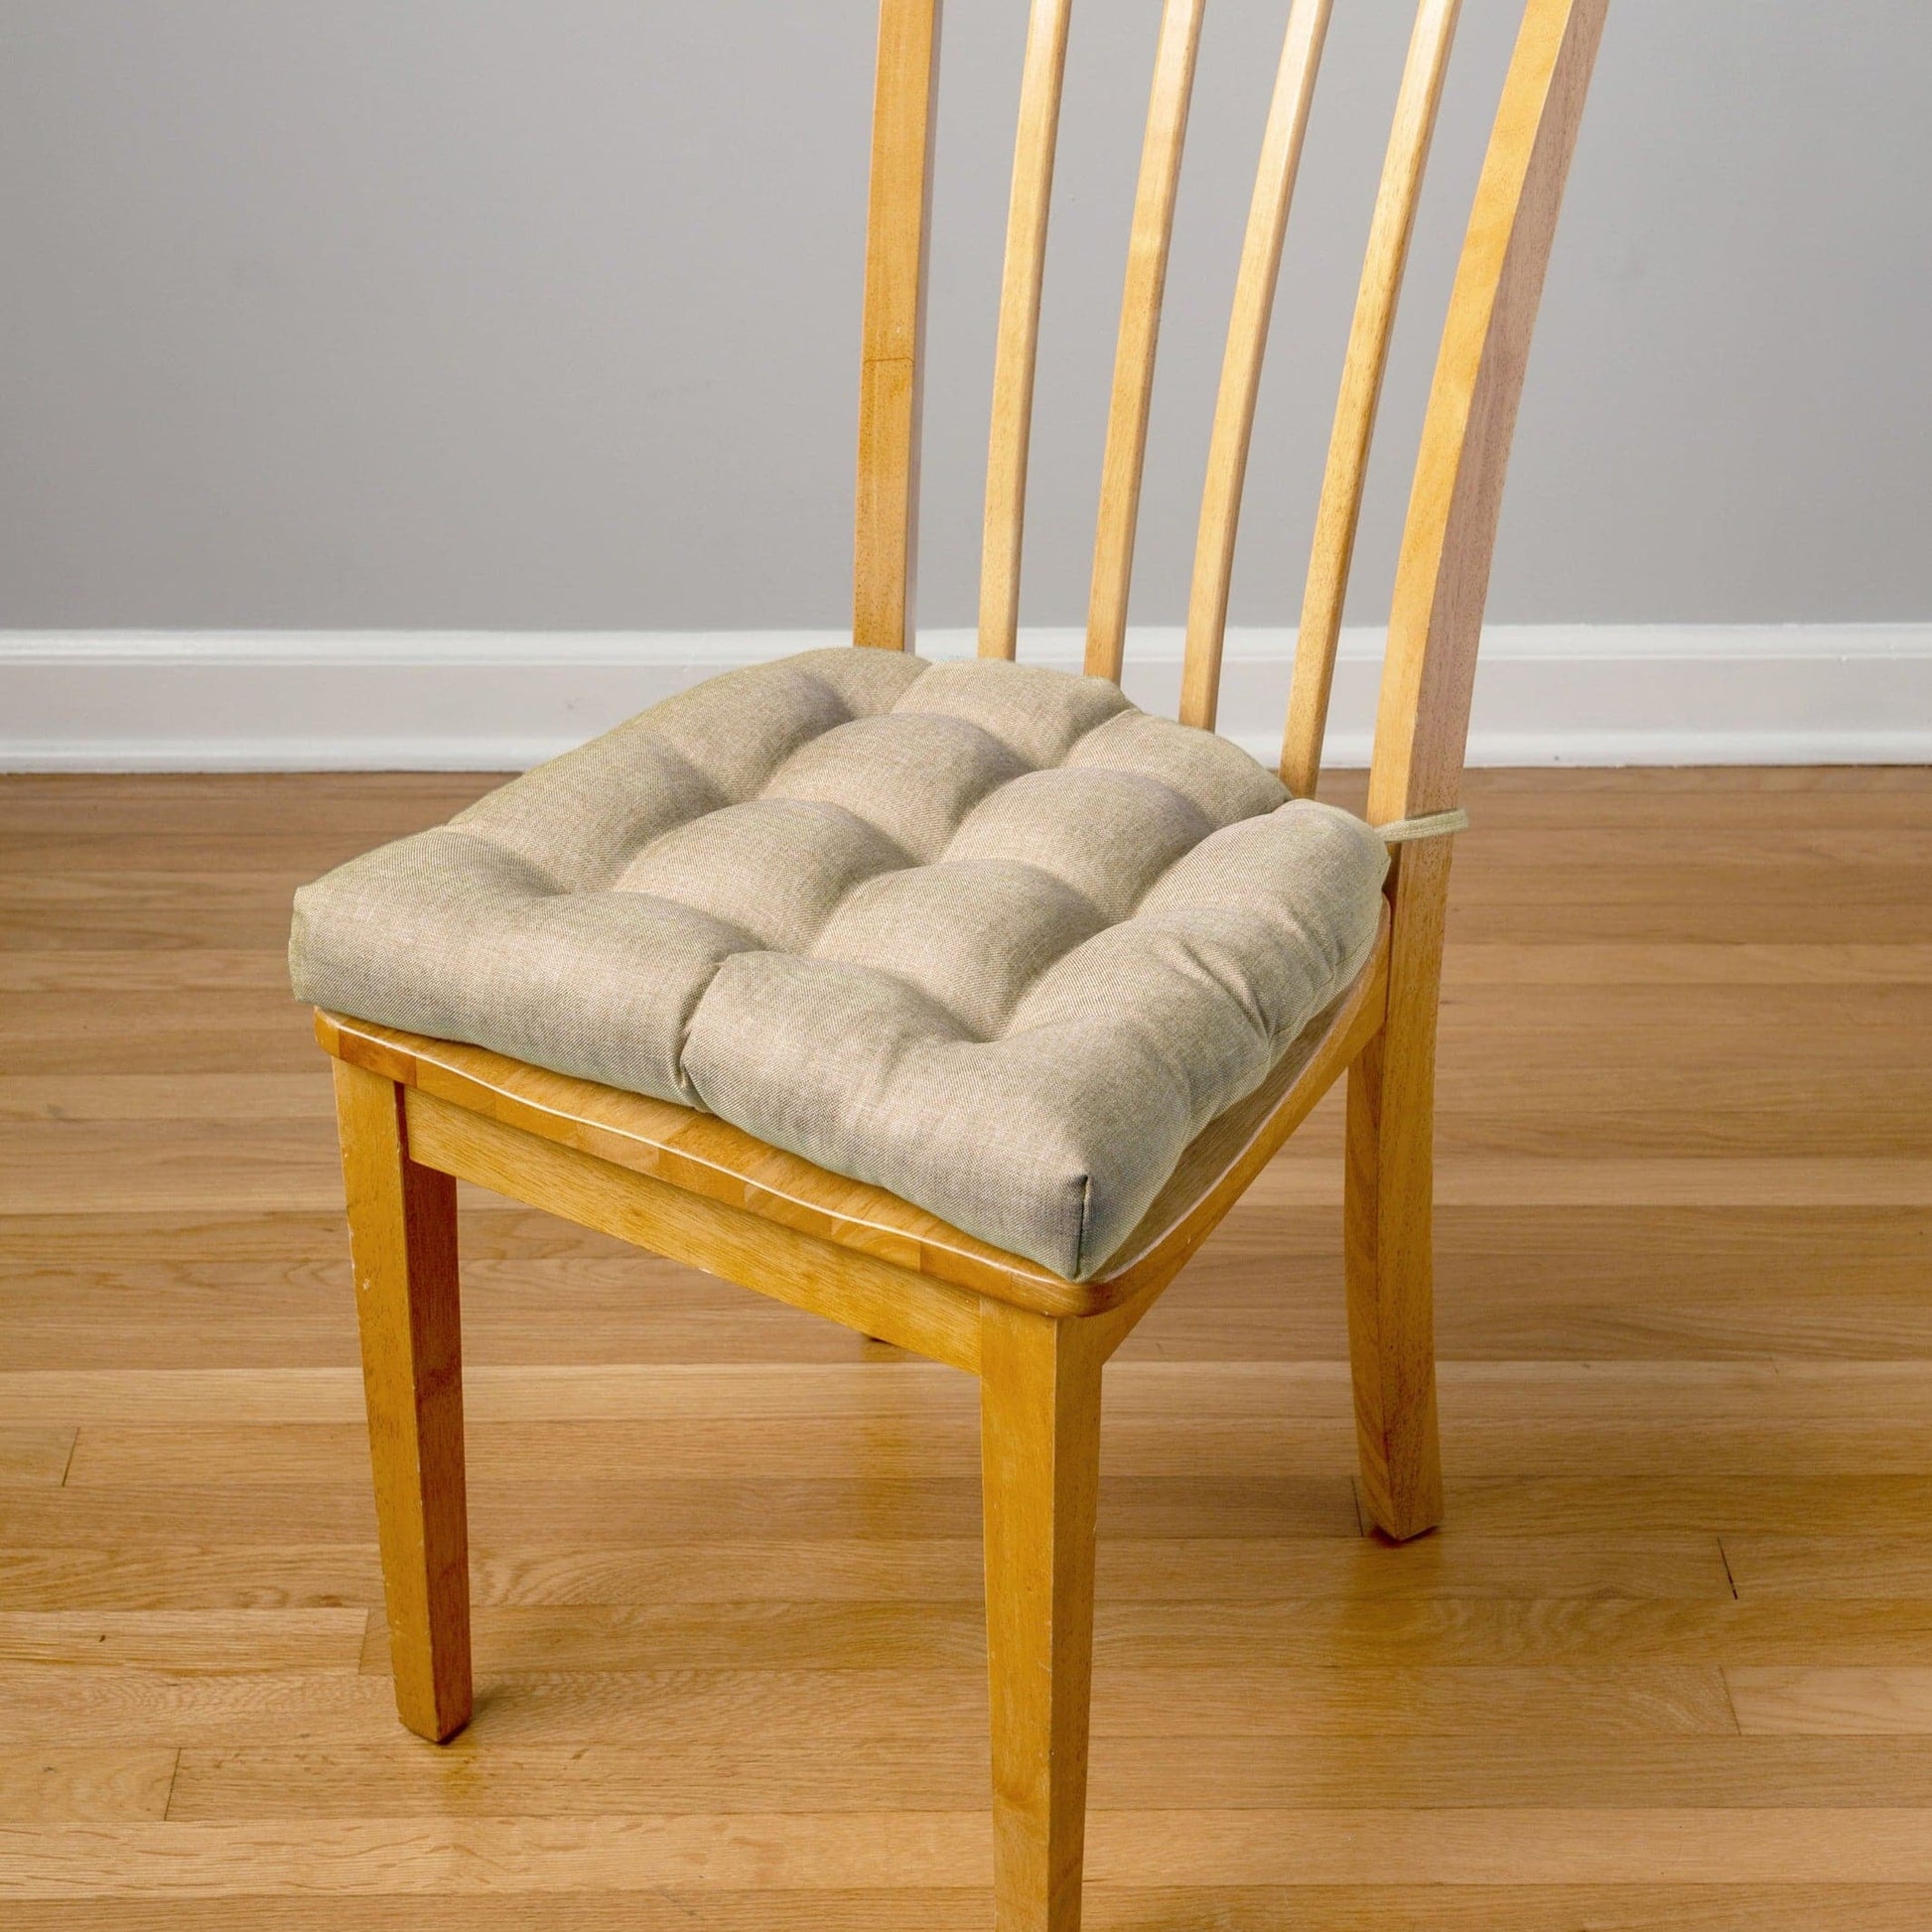 Hayden Grey Saddle Stool Cushions - Gaucho Stool - Satori Seat Cushions